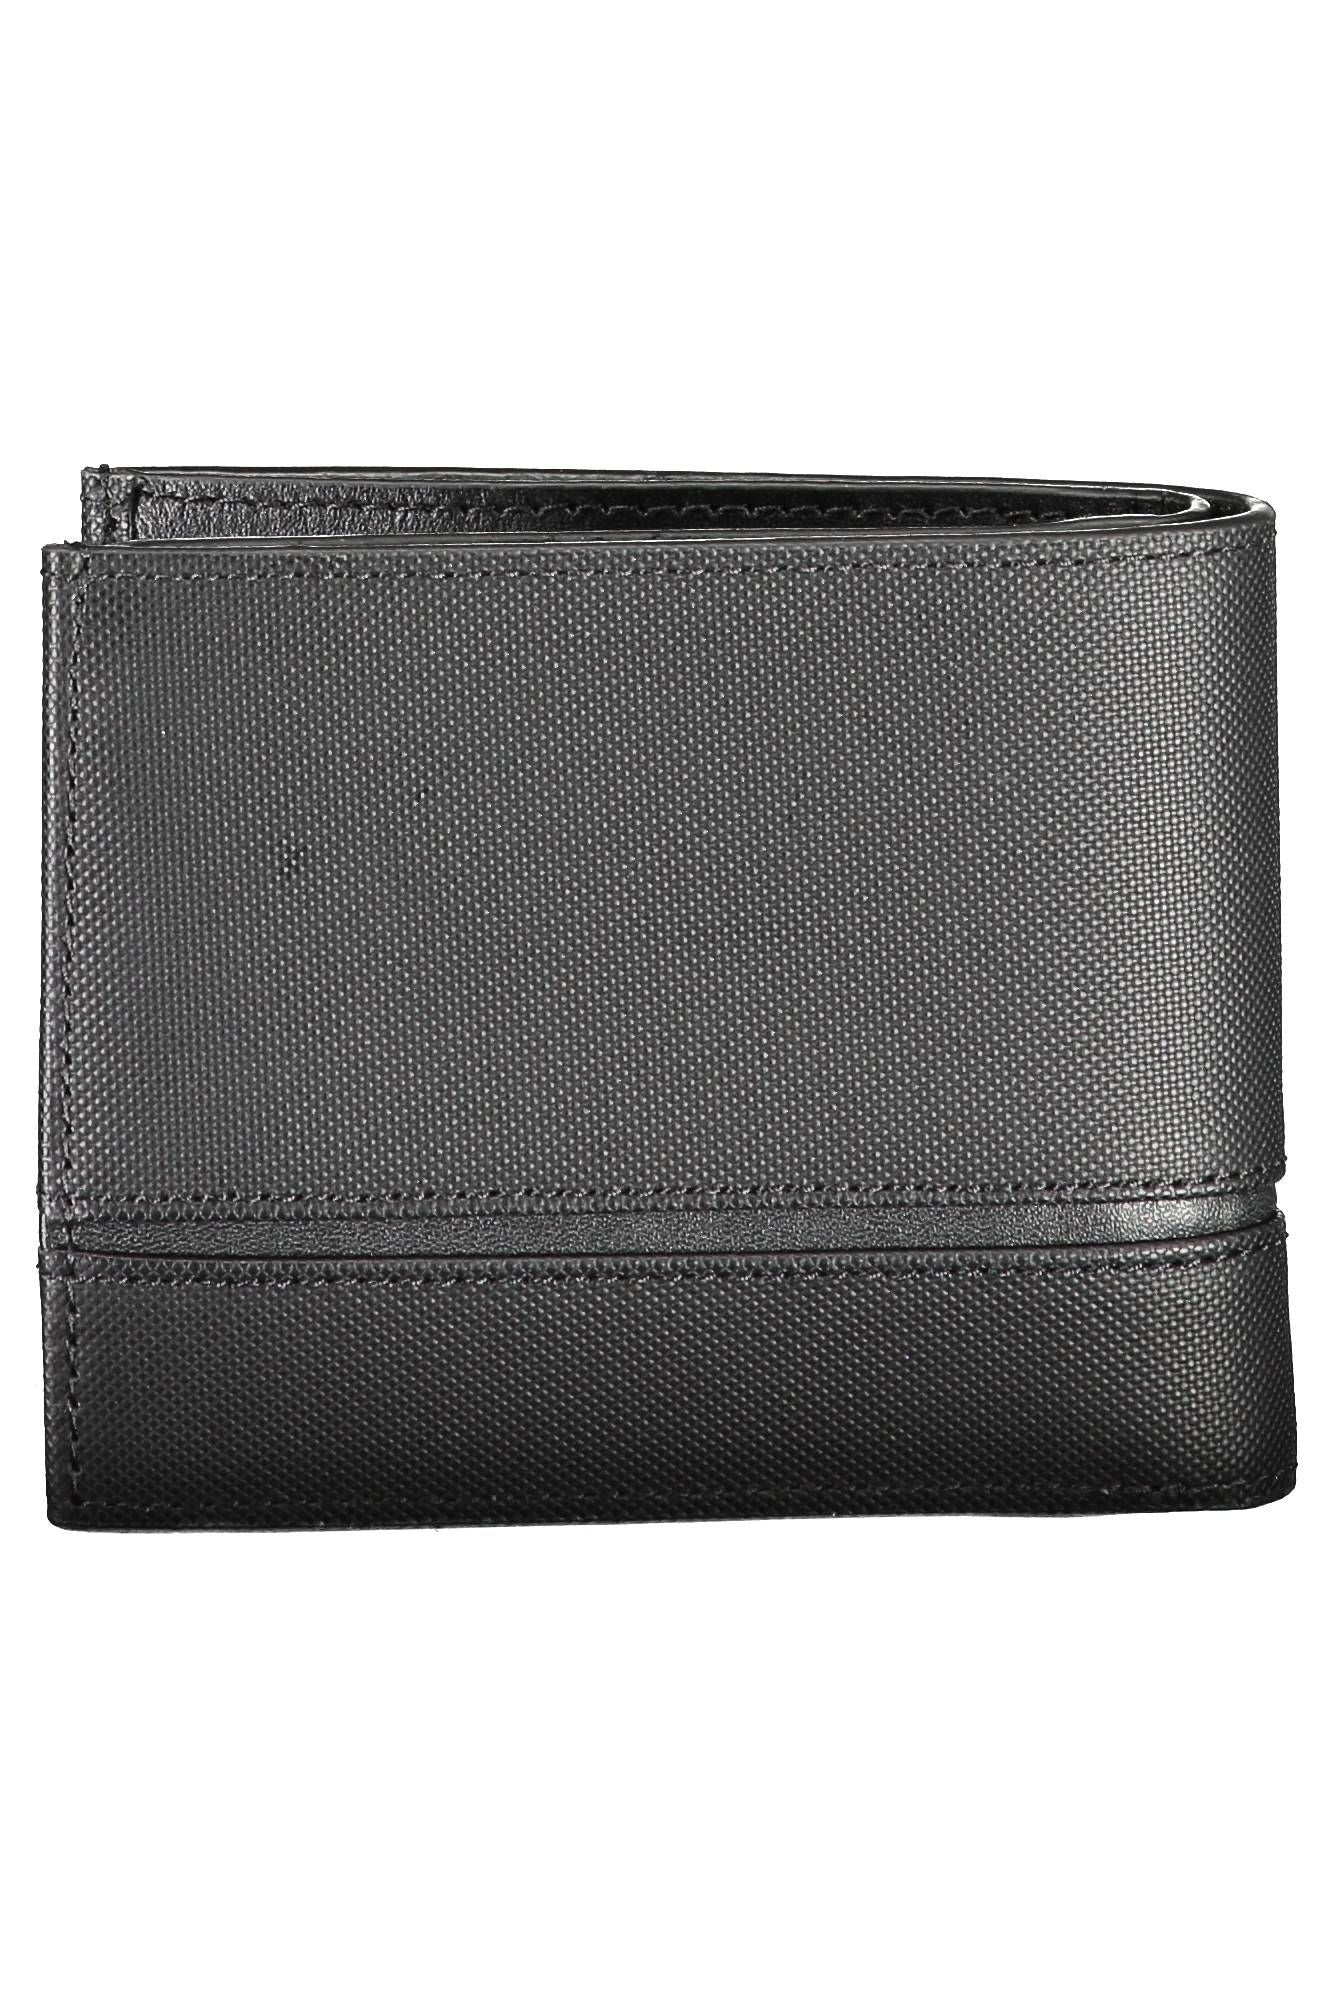 Elegant Black Leather RFID Wallet